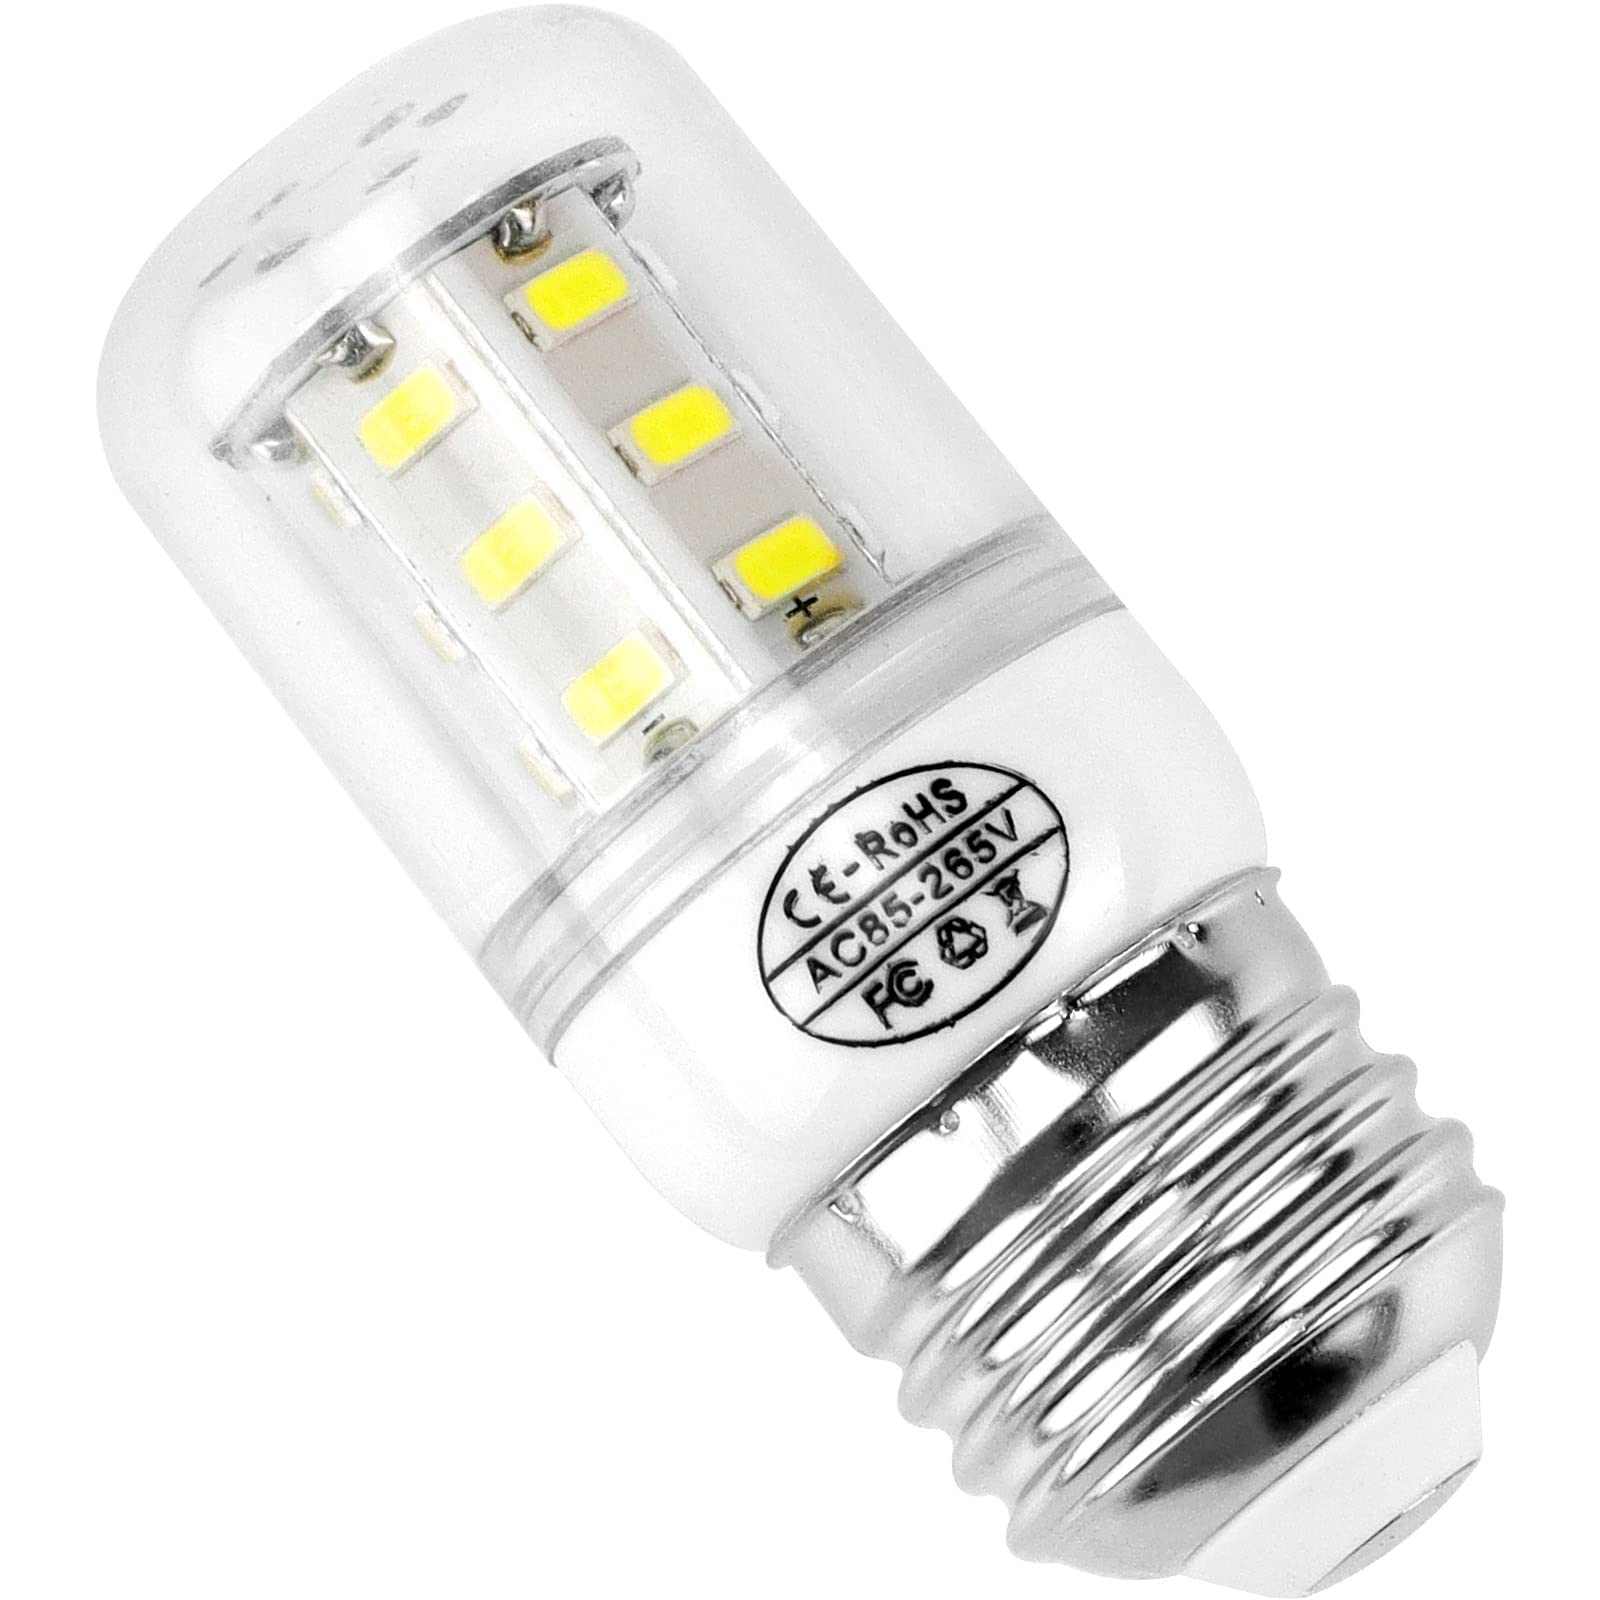 AMI PARTS Refrigerator Light Bulb KEI D34L Bulb Fit for Frigidaire Kenmore 5304511738 Refrigerator Light Bulb Replace AP6278388 PS12364857(3.5W 85V-265V Appliance Bulb White Light)-2Packs